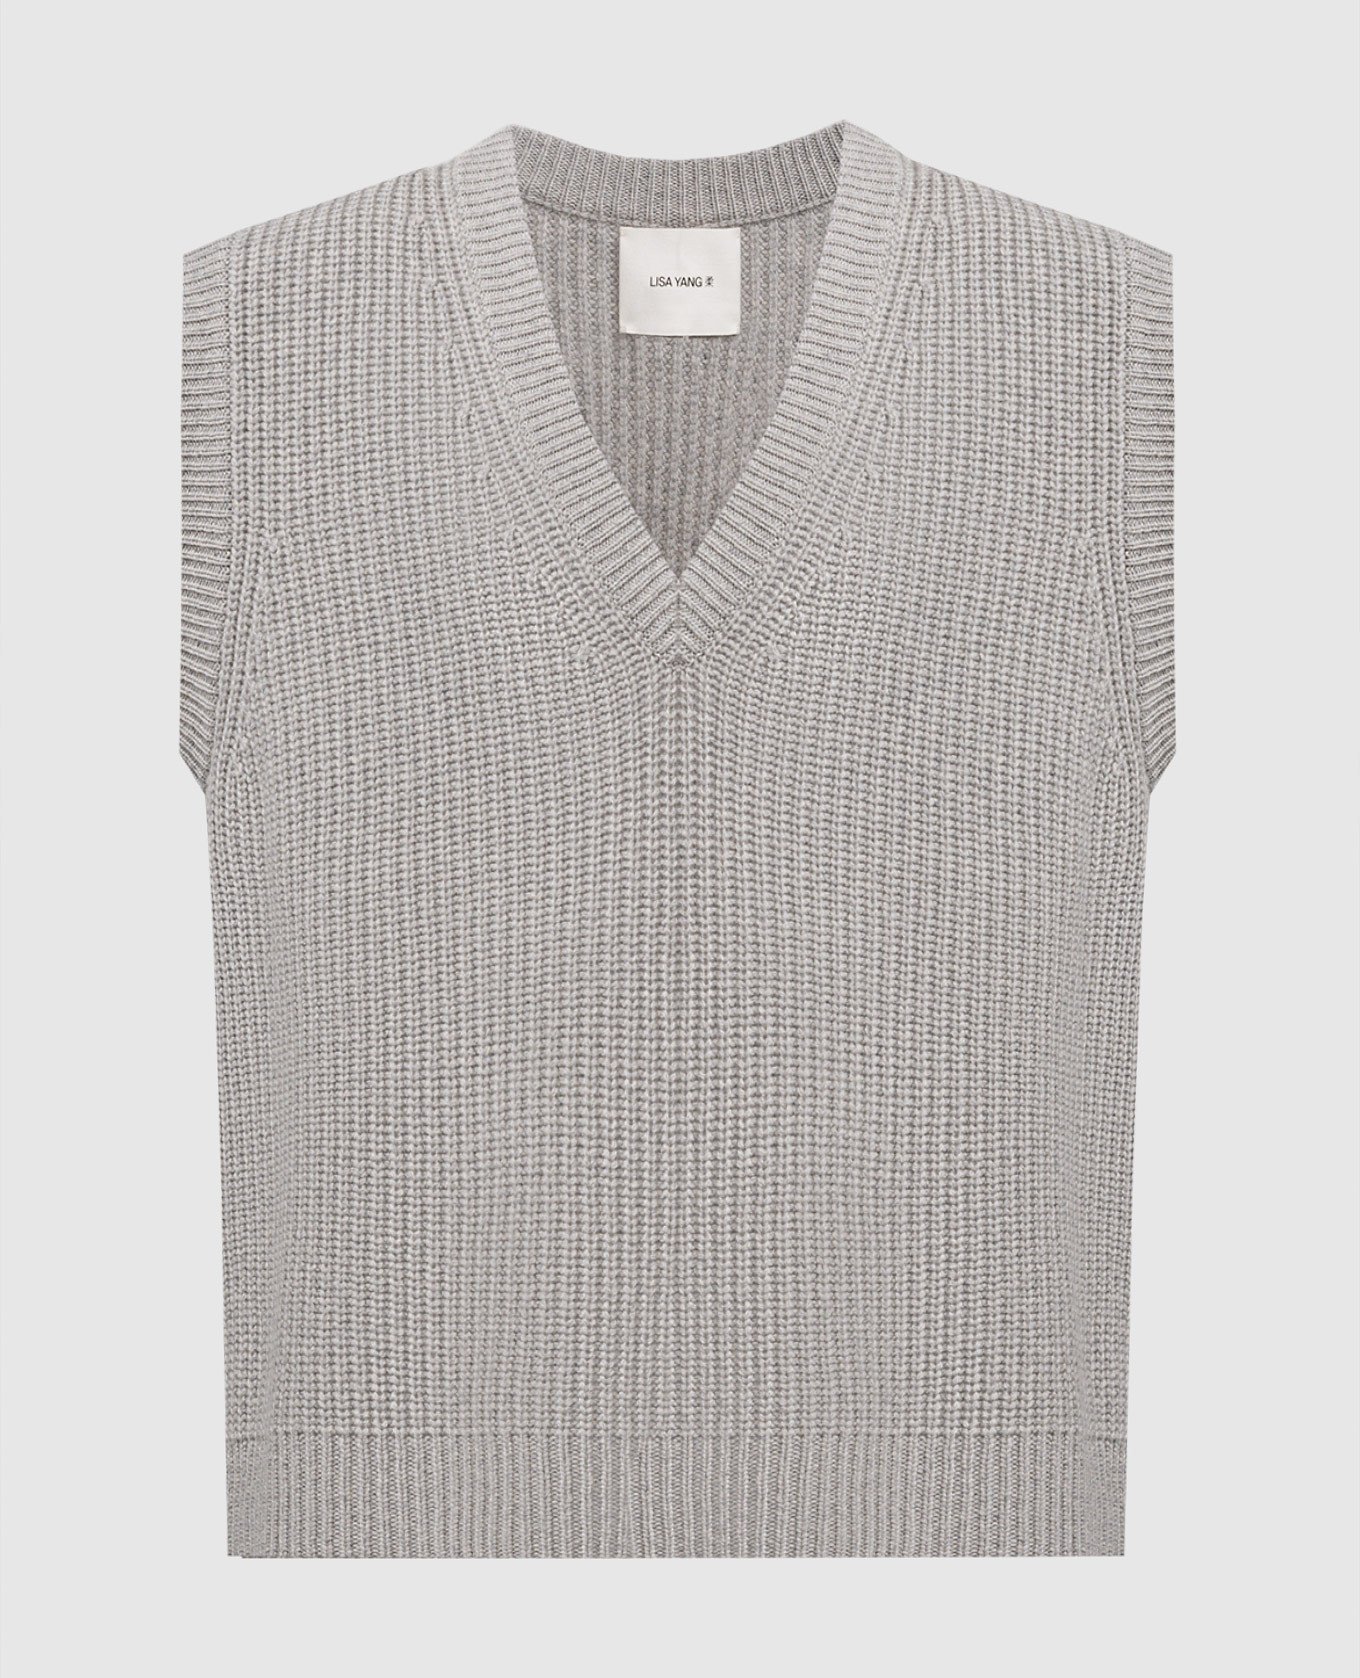 Raine gray cashmere vest